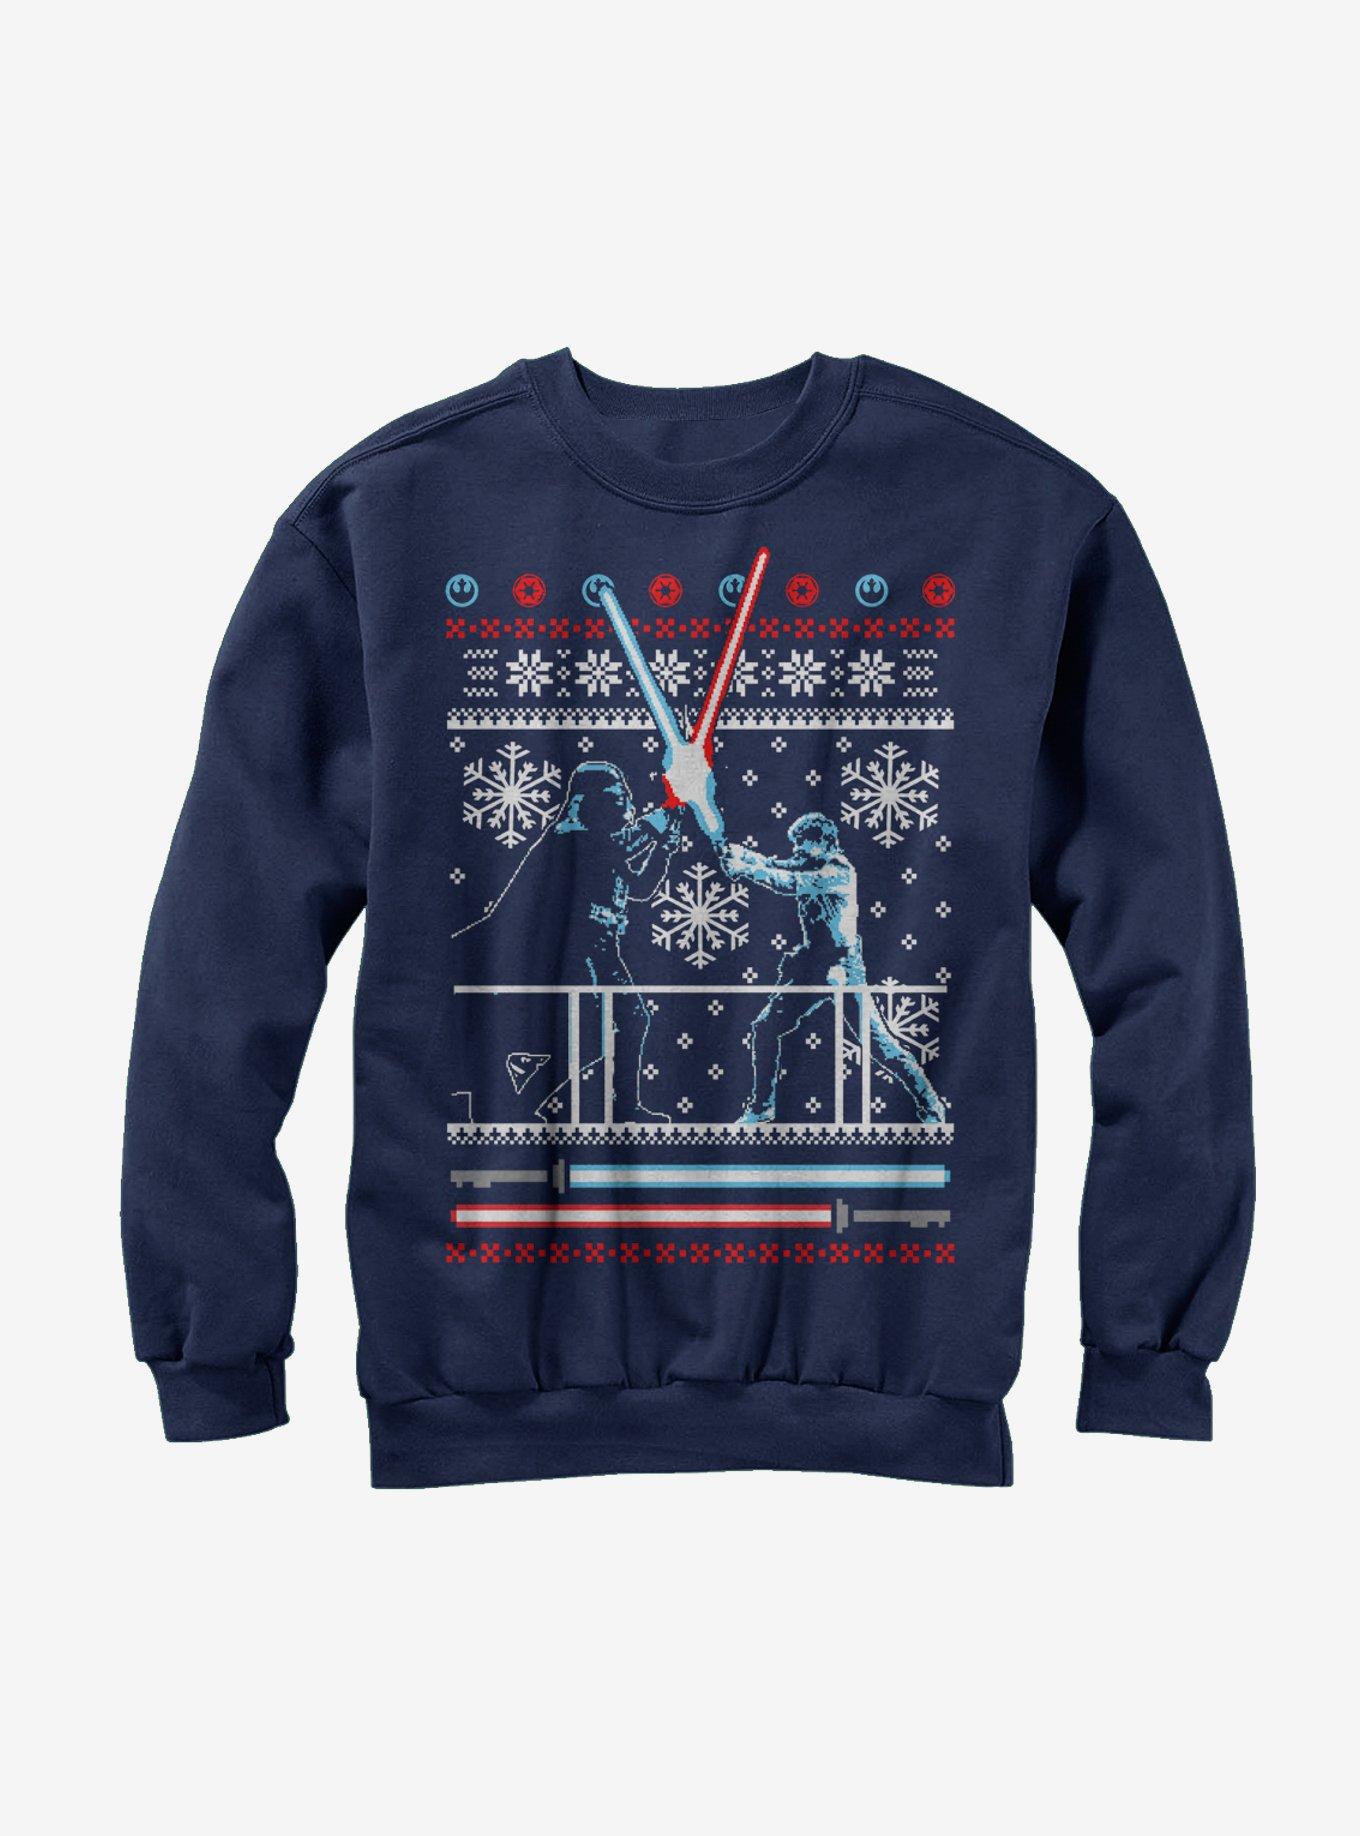 Star Wars Ugly Christmas Sweater Duel Girls Sweatshirt, NAVY, hi-res